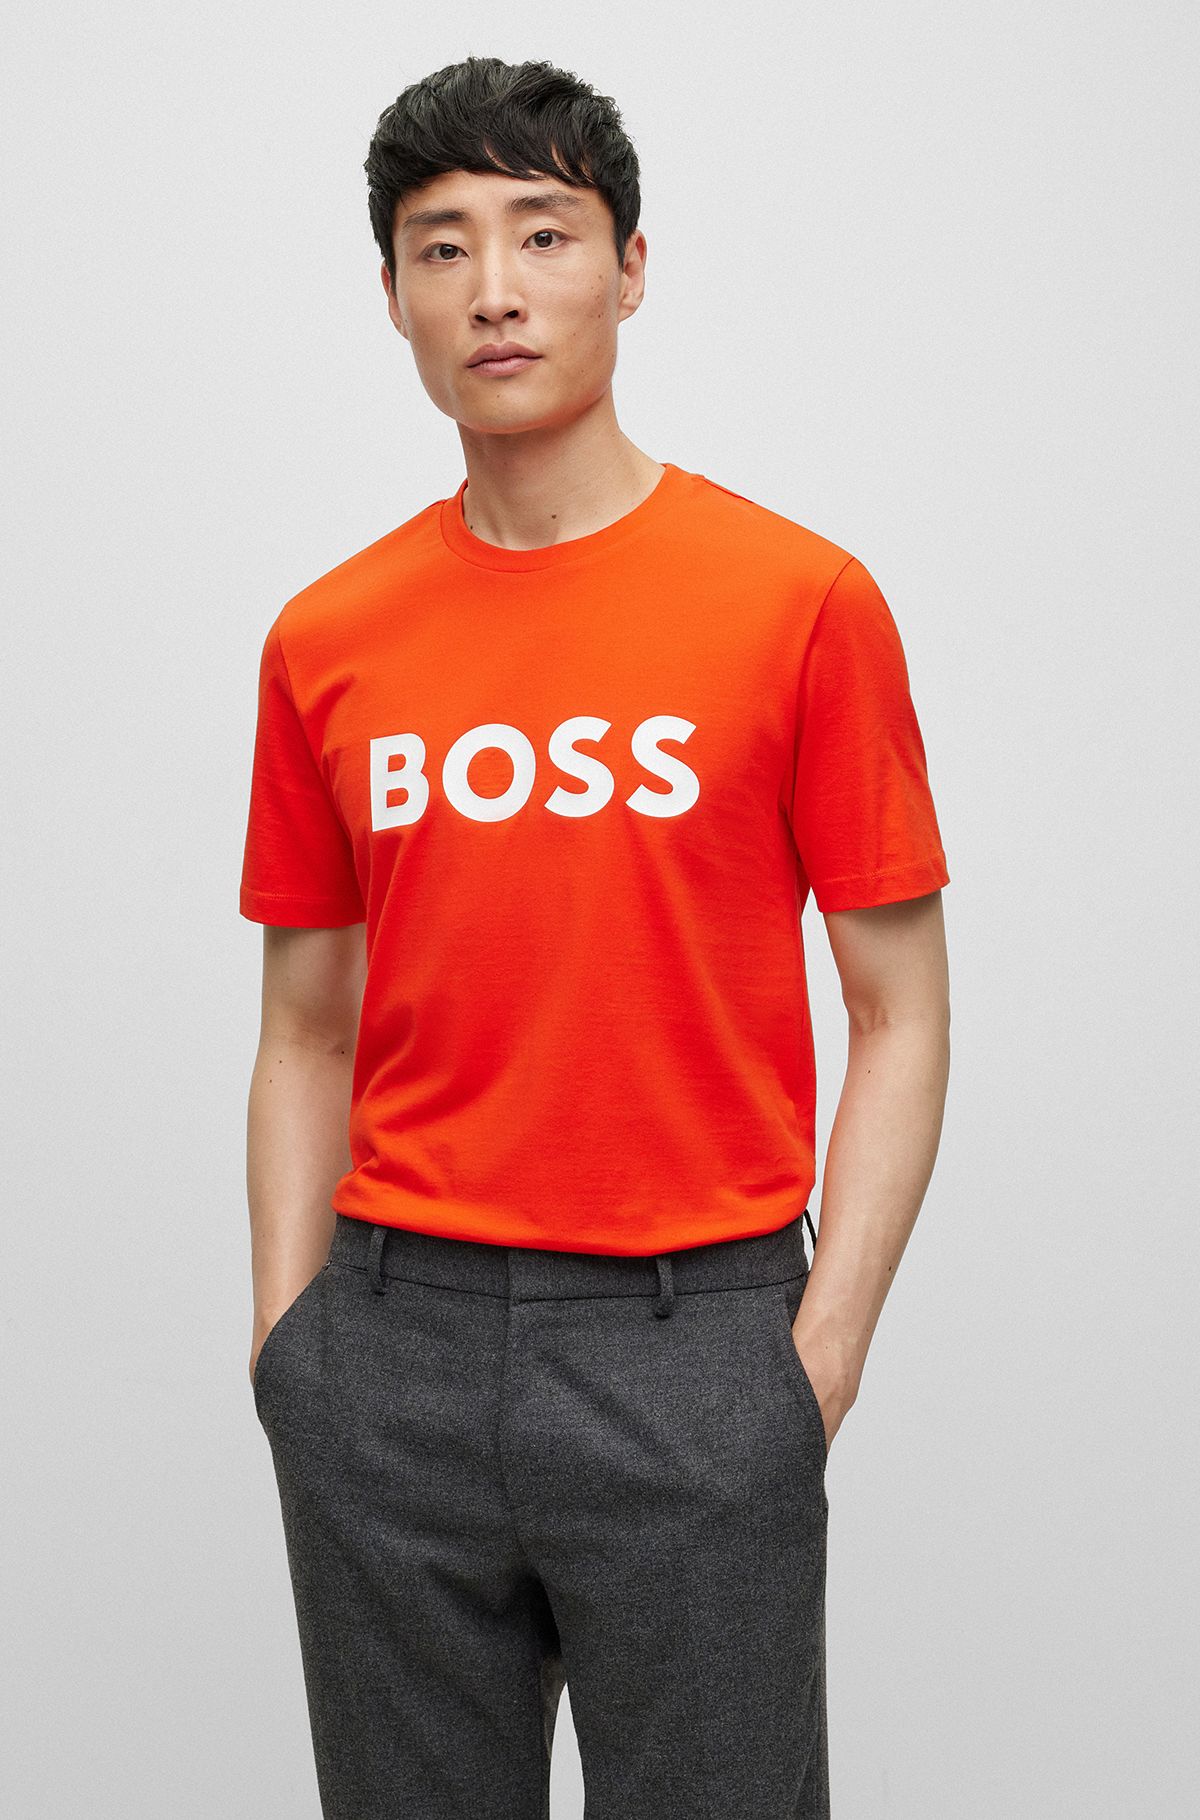 T-Shirts in Orange by HUGO BOSS | Men